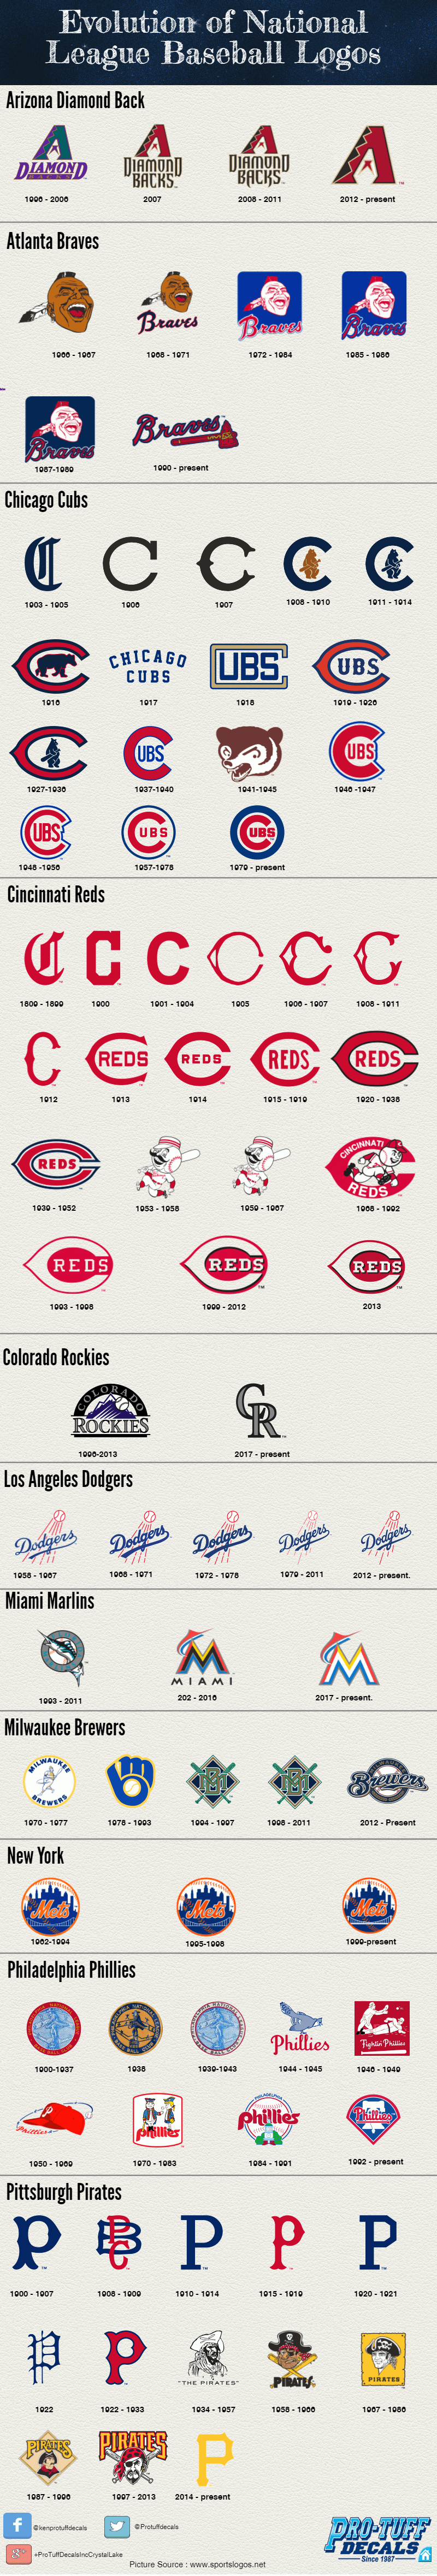 Evolution of National League Baseball Logos